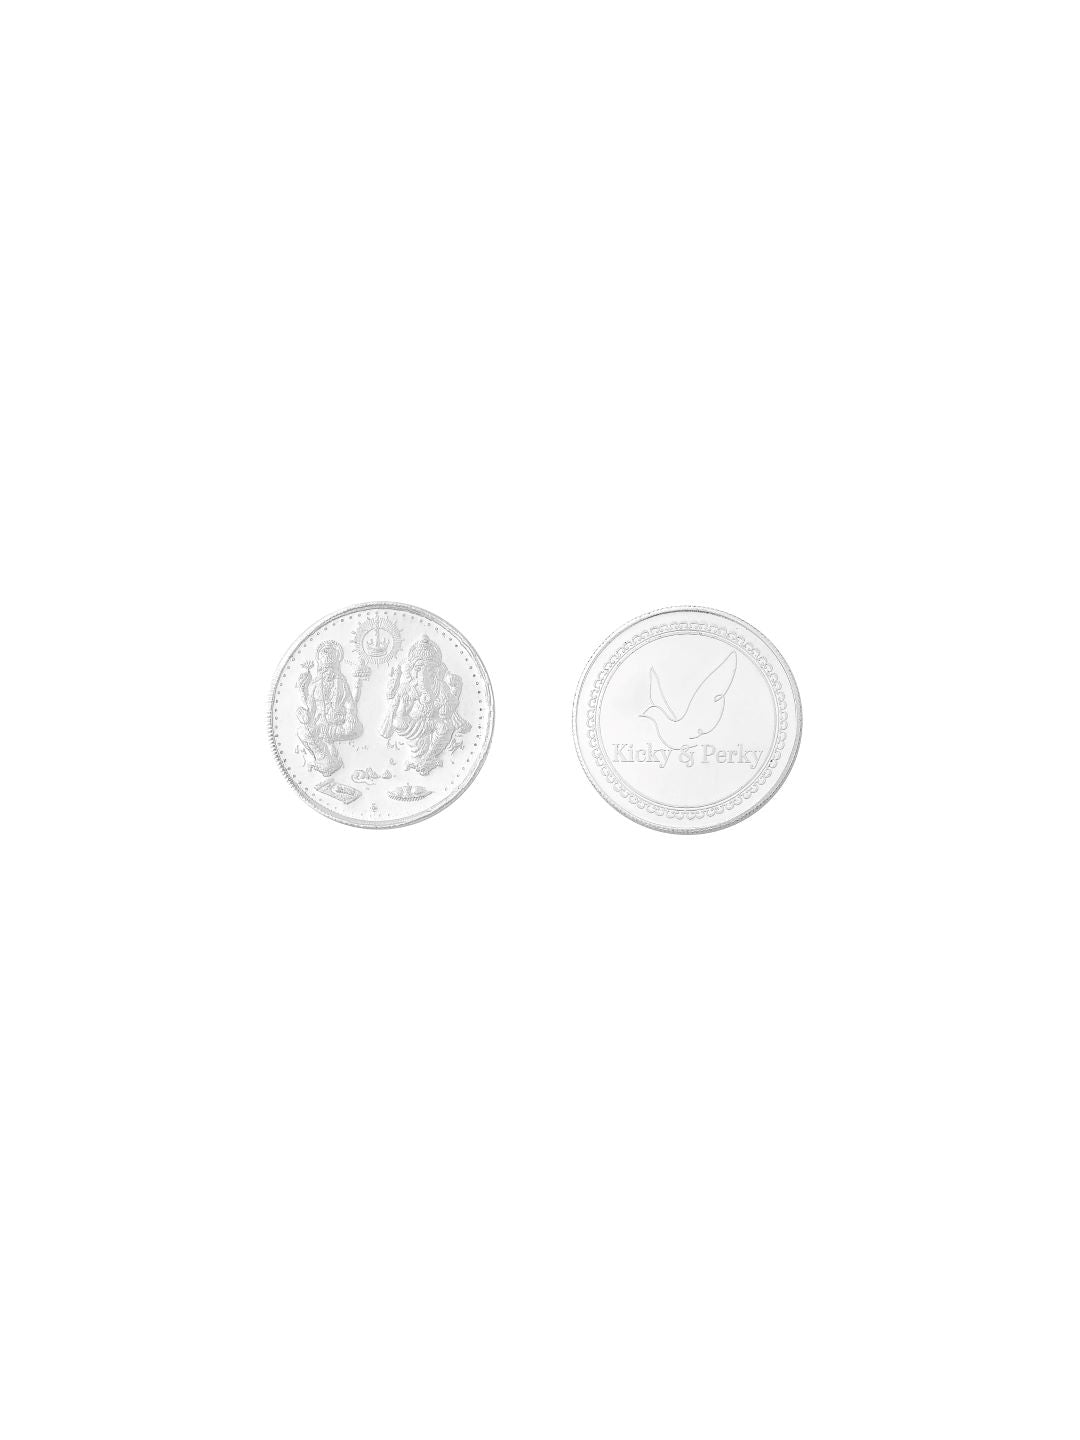 Divine 5g Pure Silver Laxmi Maa and Ganesh Ji Coin